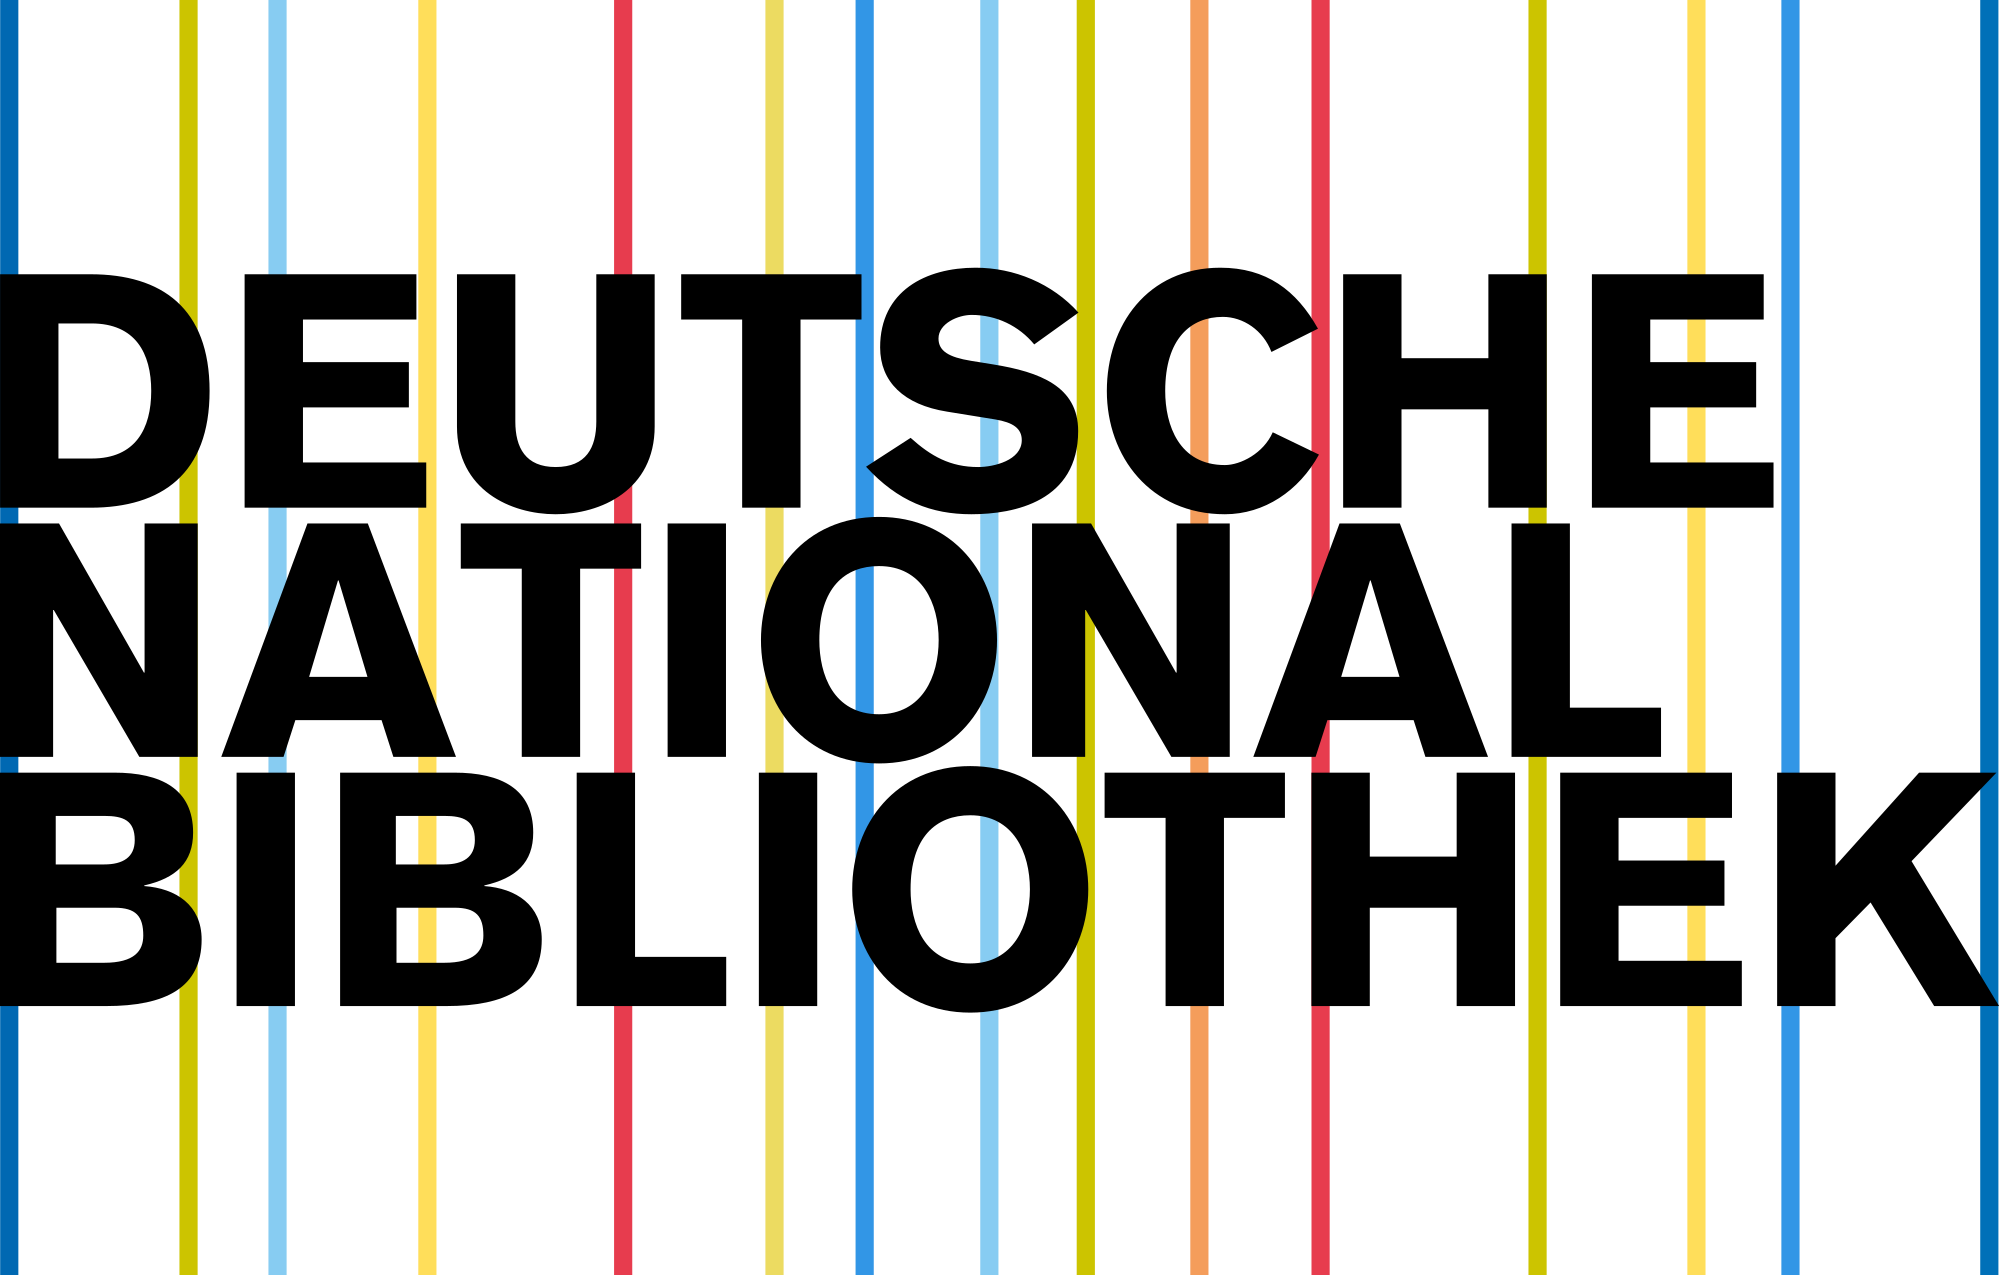 Logo DNB